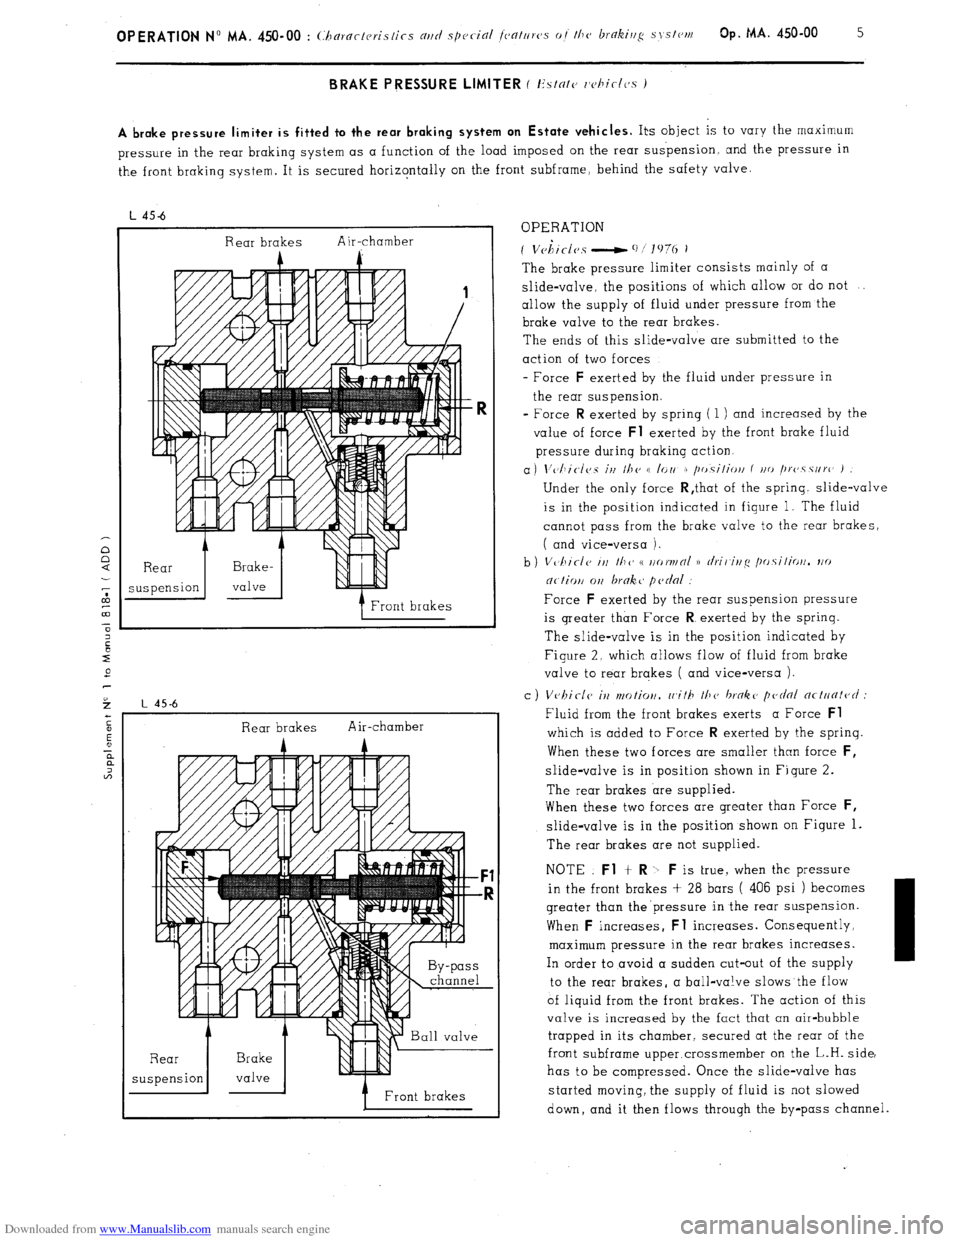 Citroen CX 1981 1.G Workshop Manual Downloaded from www.Manualslib.com manuals search engine OPERATION No MA. 450-00 : Ch nrnclcrislics ortd sp~~c-i~l (c~c~trlrc>s 01 the hokiug S SI~IN Op. MA. 450.00 5 
A brake pressure limiter is fitt